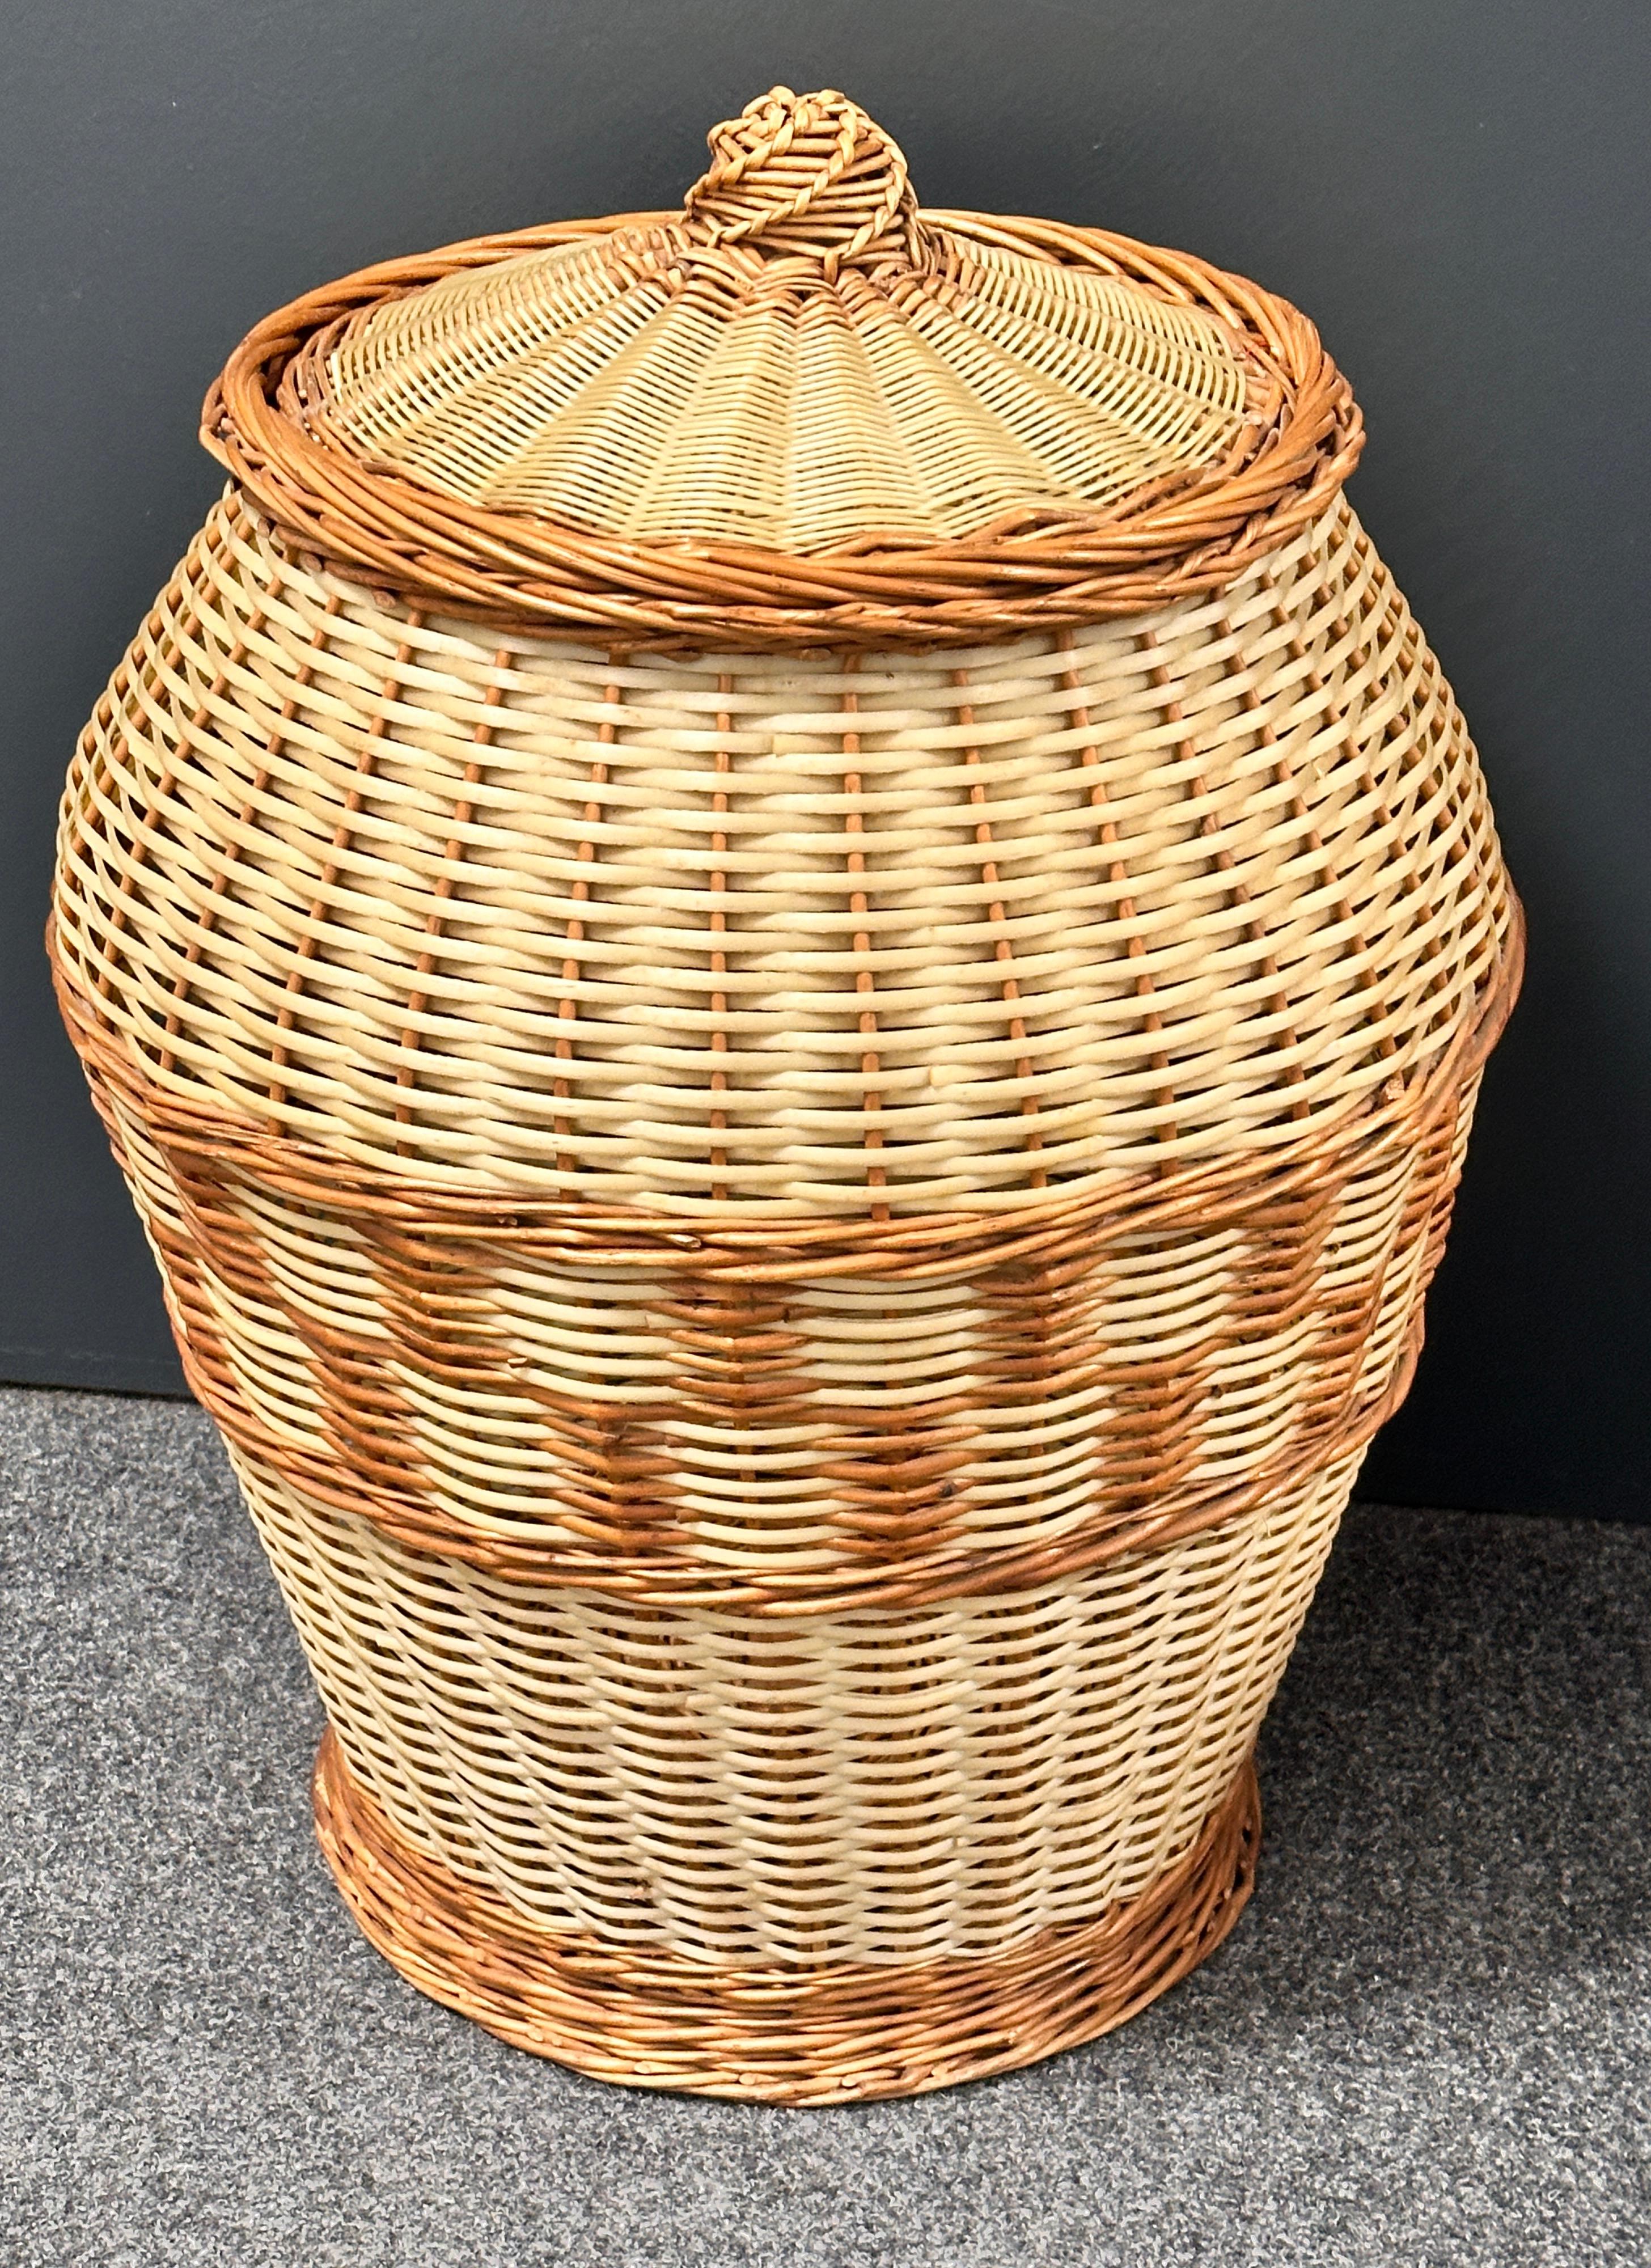 Stunning Large Vintage Midcentury Wicker Laundry Basket Hamper, 1970s, Italy For Sale 3